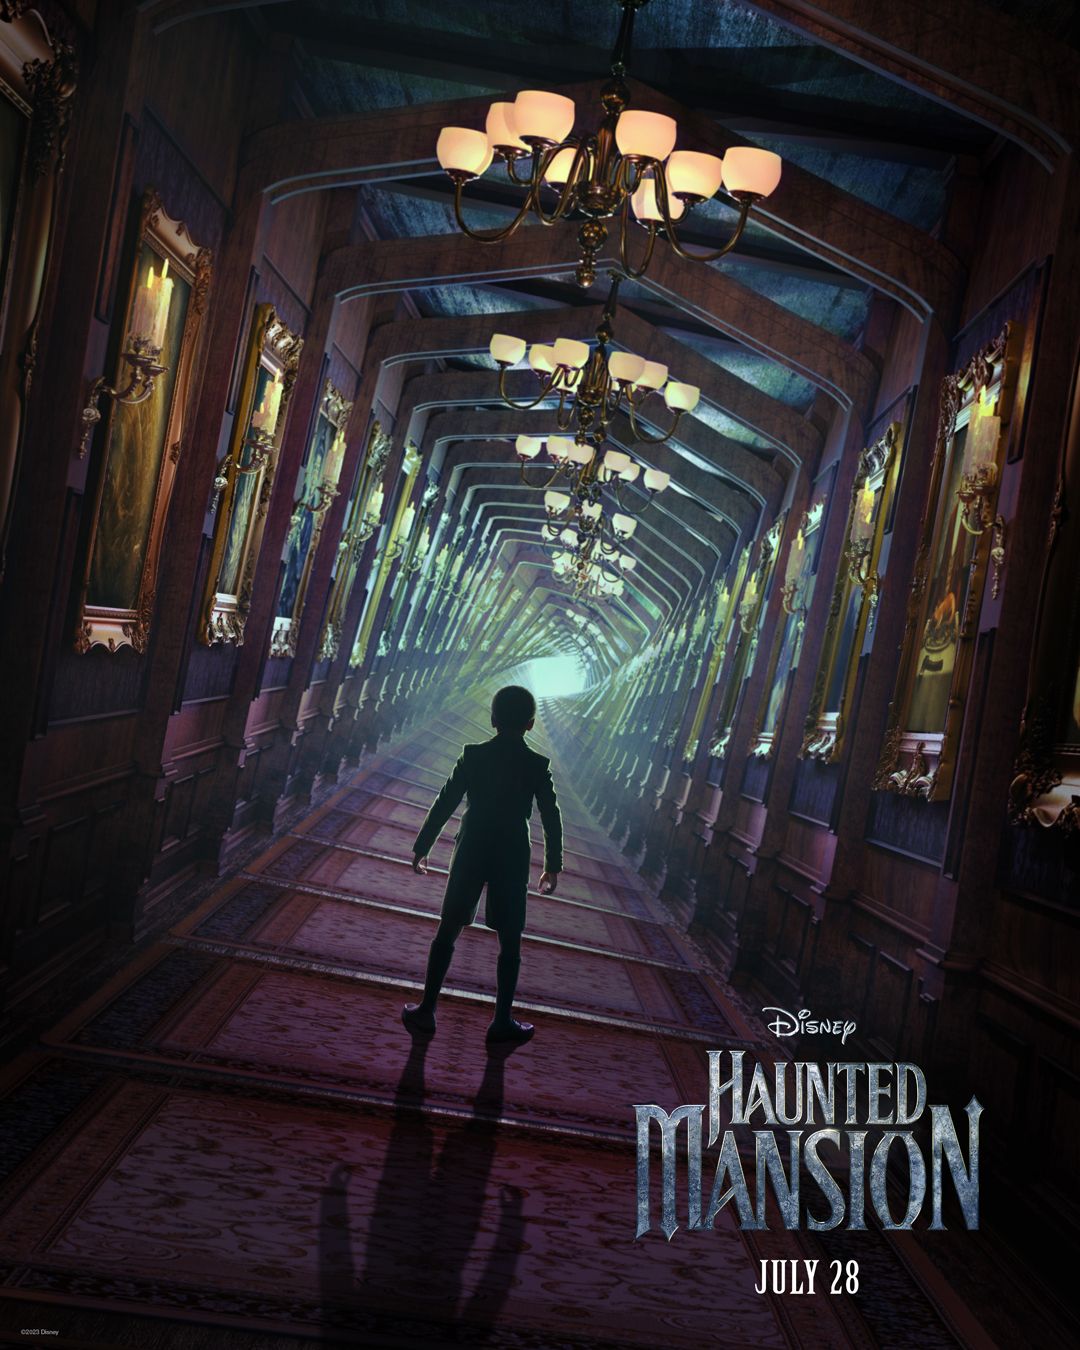 Haunted-Mansion-Poster-Disney-1